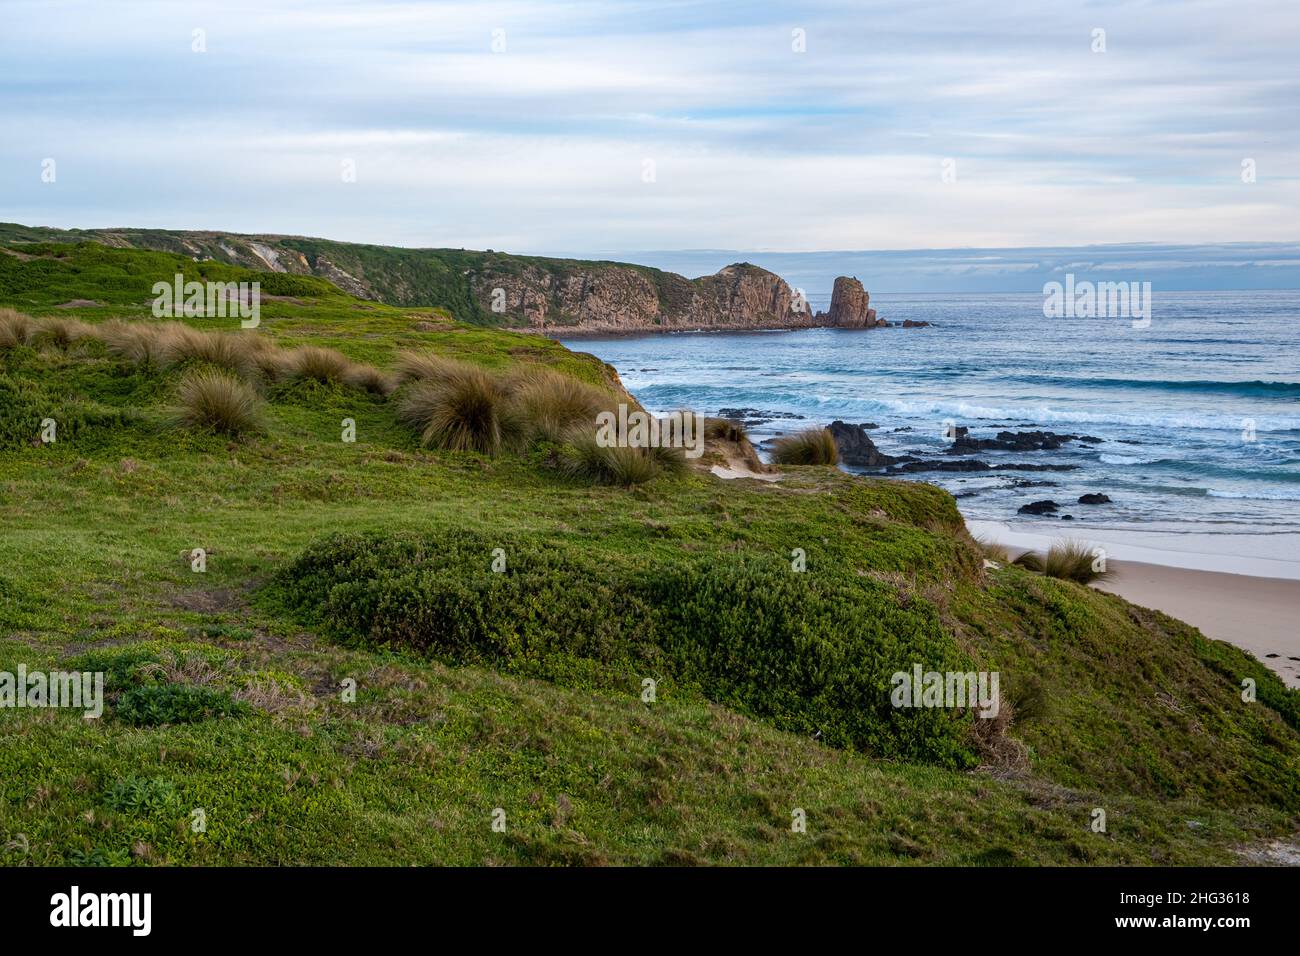 Grassy coastline with rocky outcrops at ocean beach in Australia Stock Photo